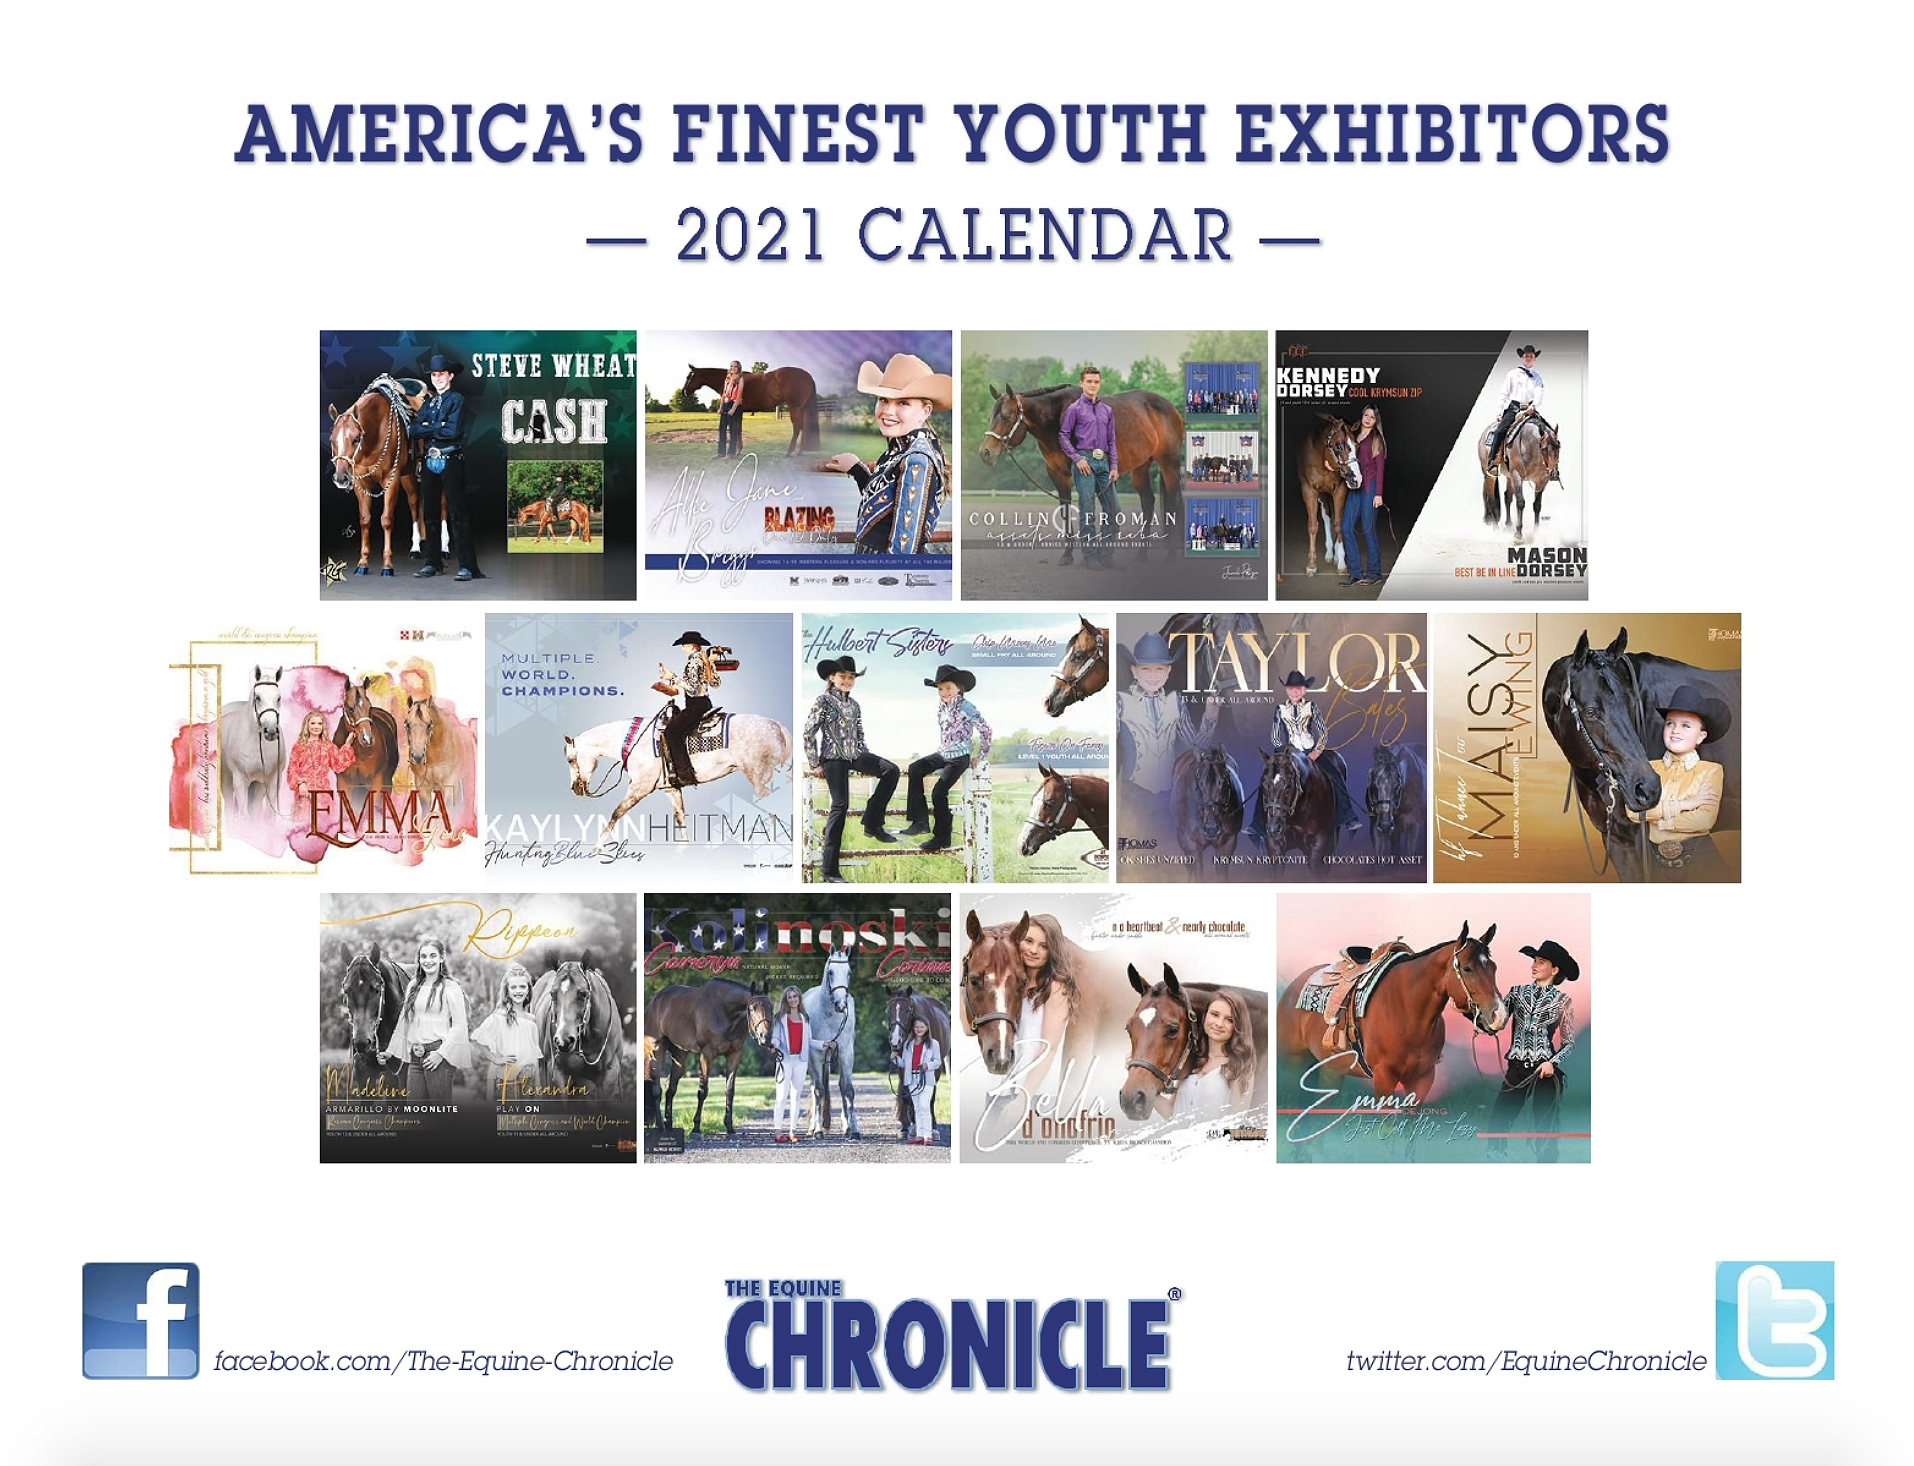 America’s Finest Youth Exhibitors 2021 Calendar